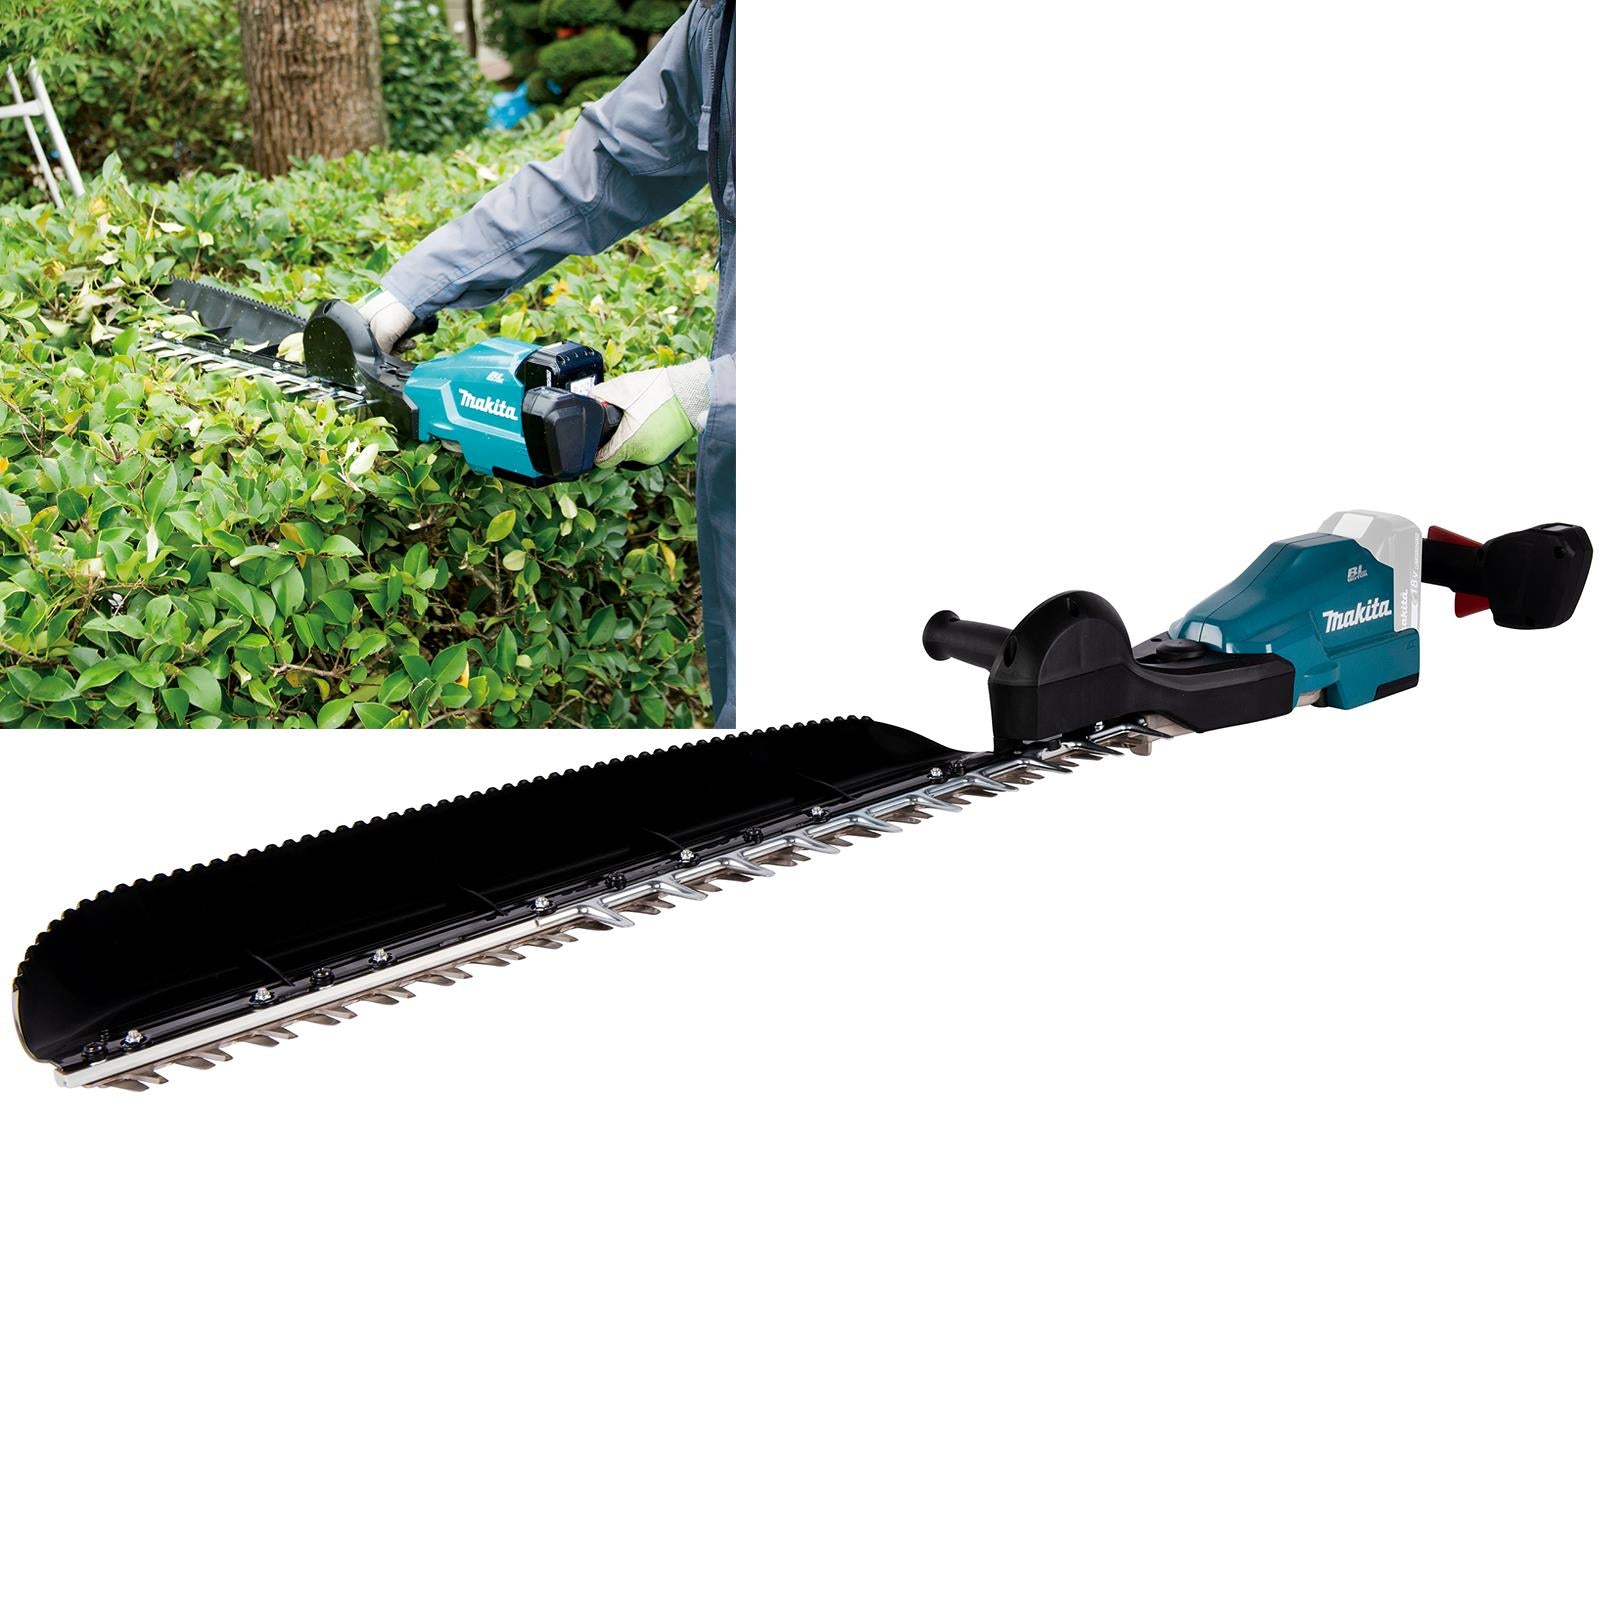 Makita Hedge Trimmer 75cm 18V LXT Li-ion Brushless Cordless Garden Bush Cutter Cutting Bare Unit Body Only DUH754SZ